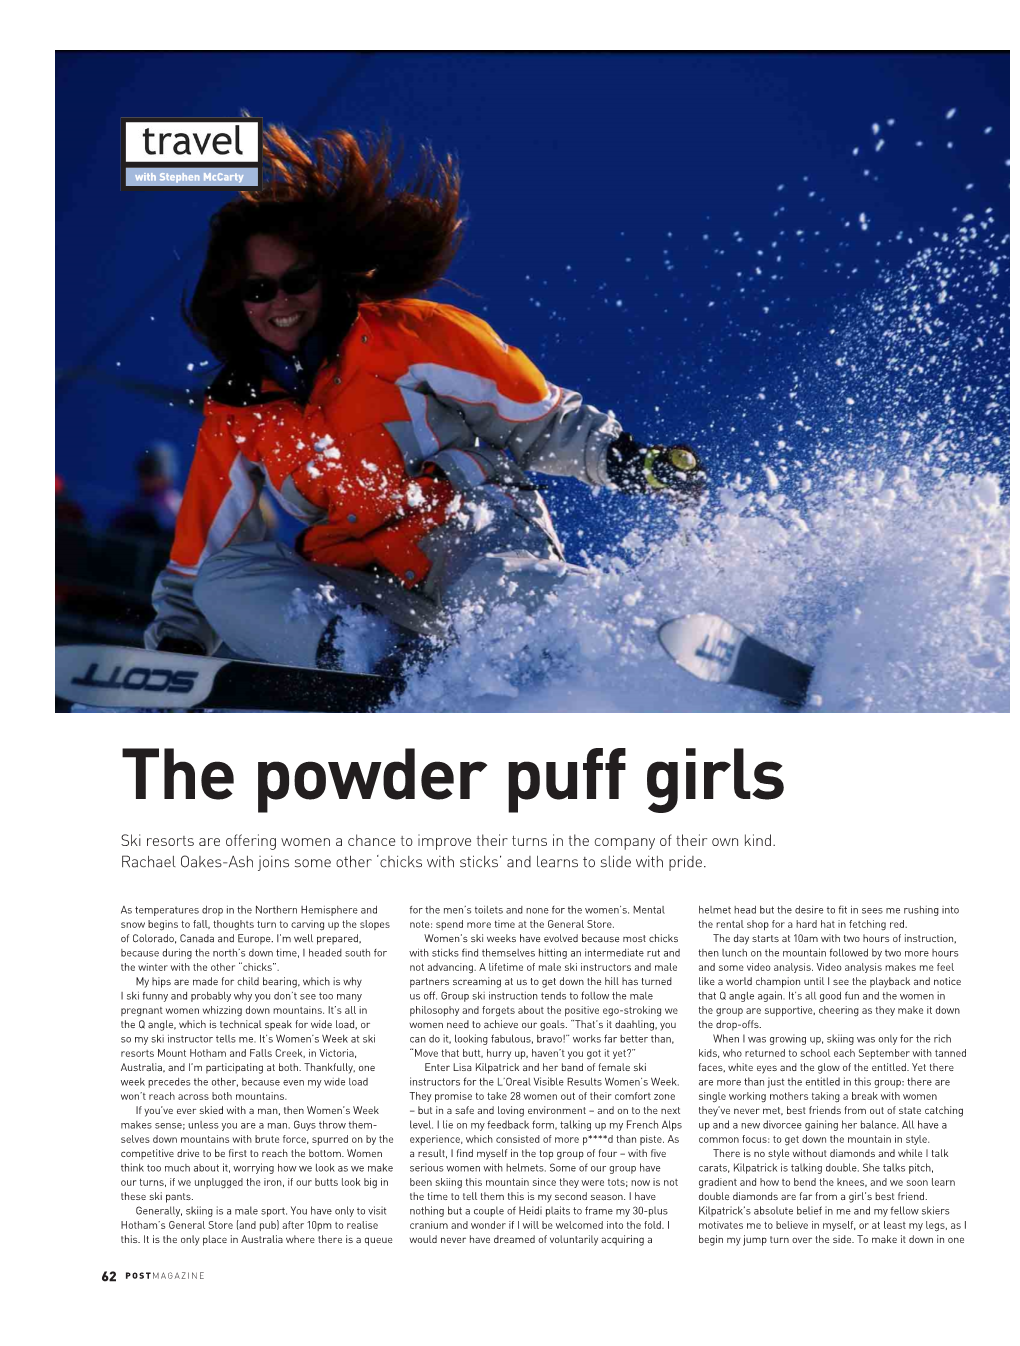 The Powder Puff Girls